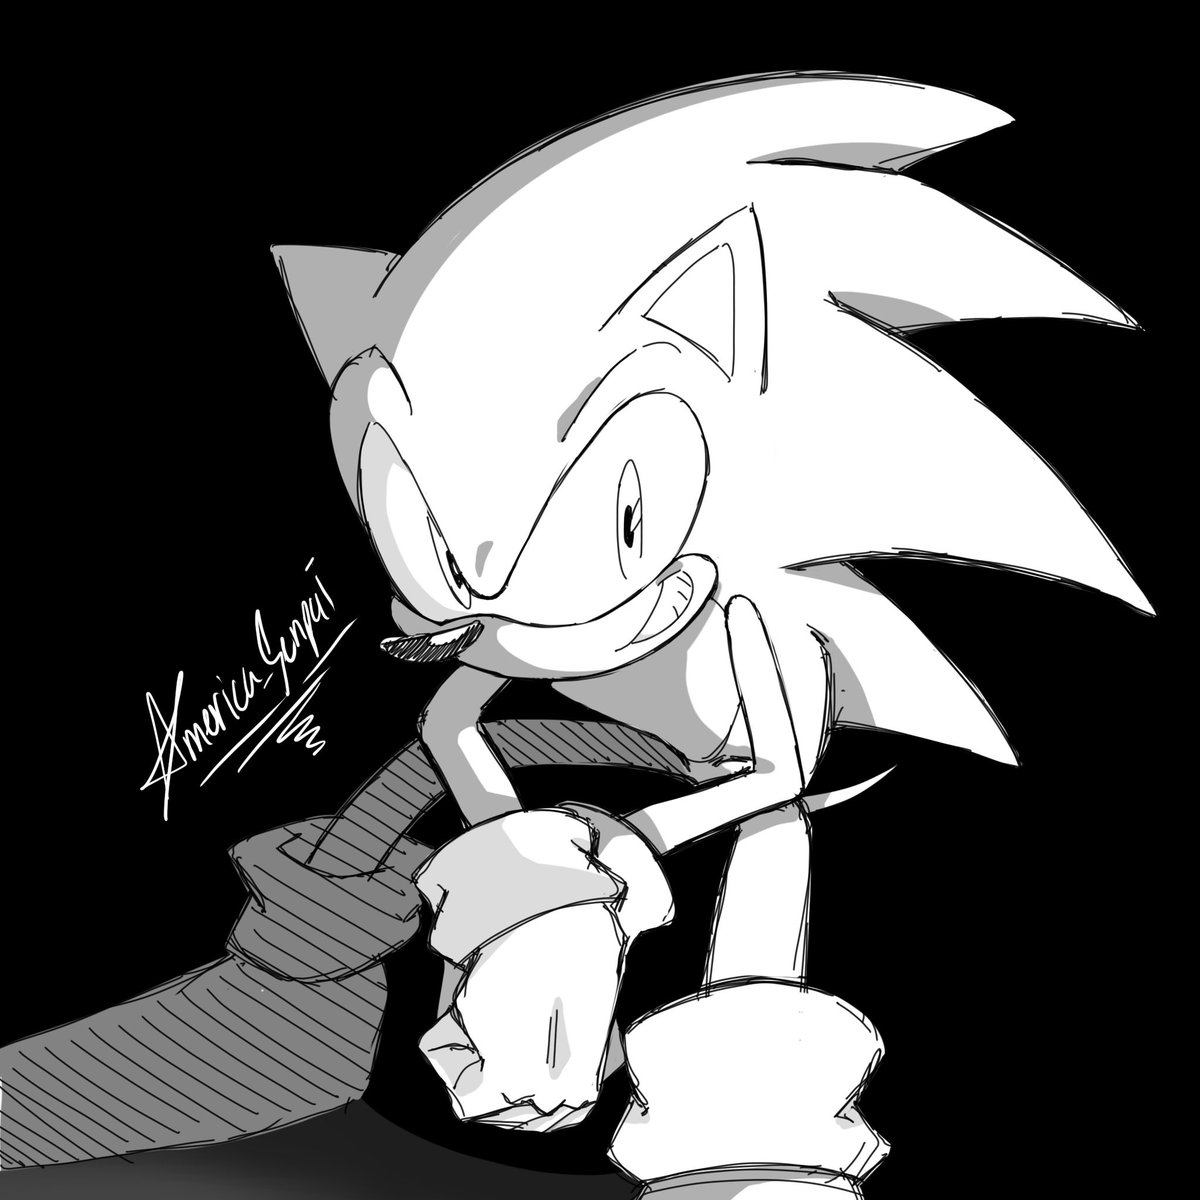 Doodle based on @NaotoOhshima sketches

#SonicTheHedgehog
#Sonic 